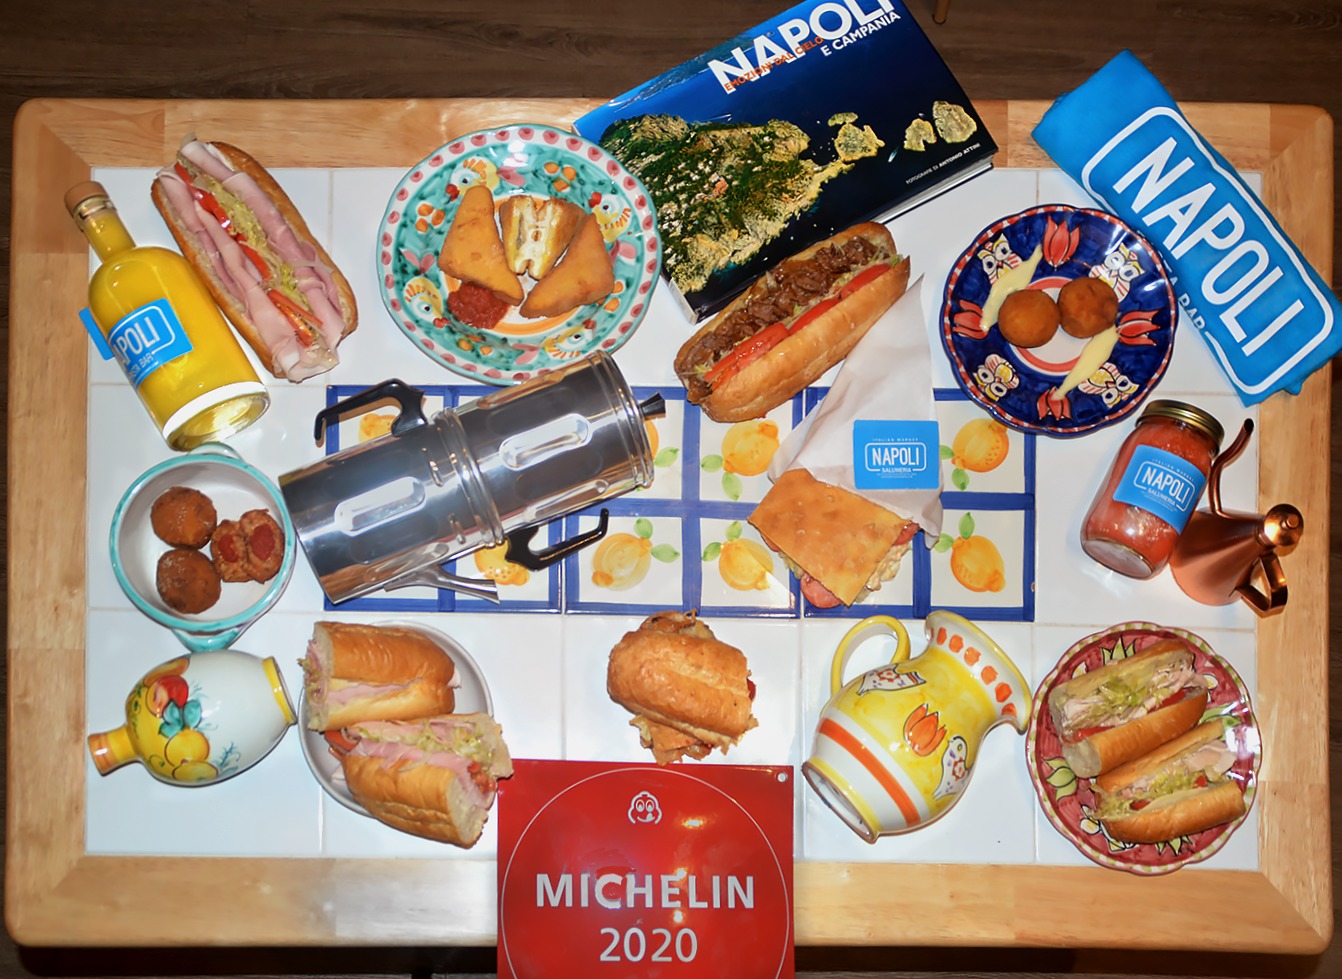 Napoli Salumeria sells sandwiches, street snacks, and plateware